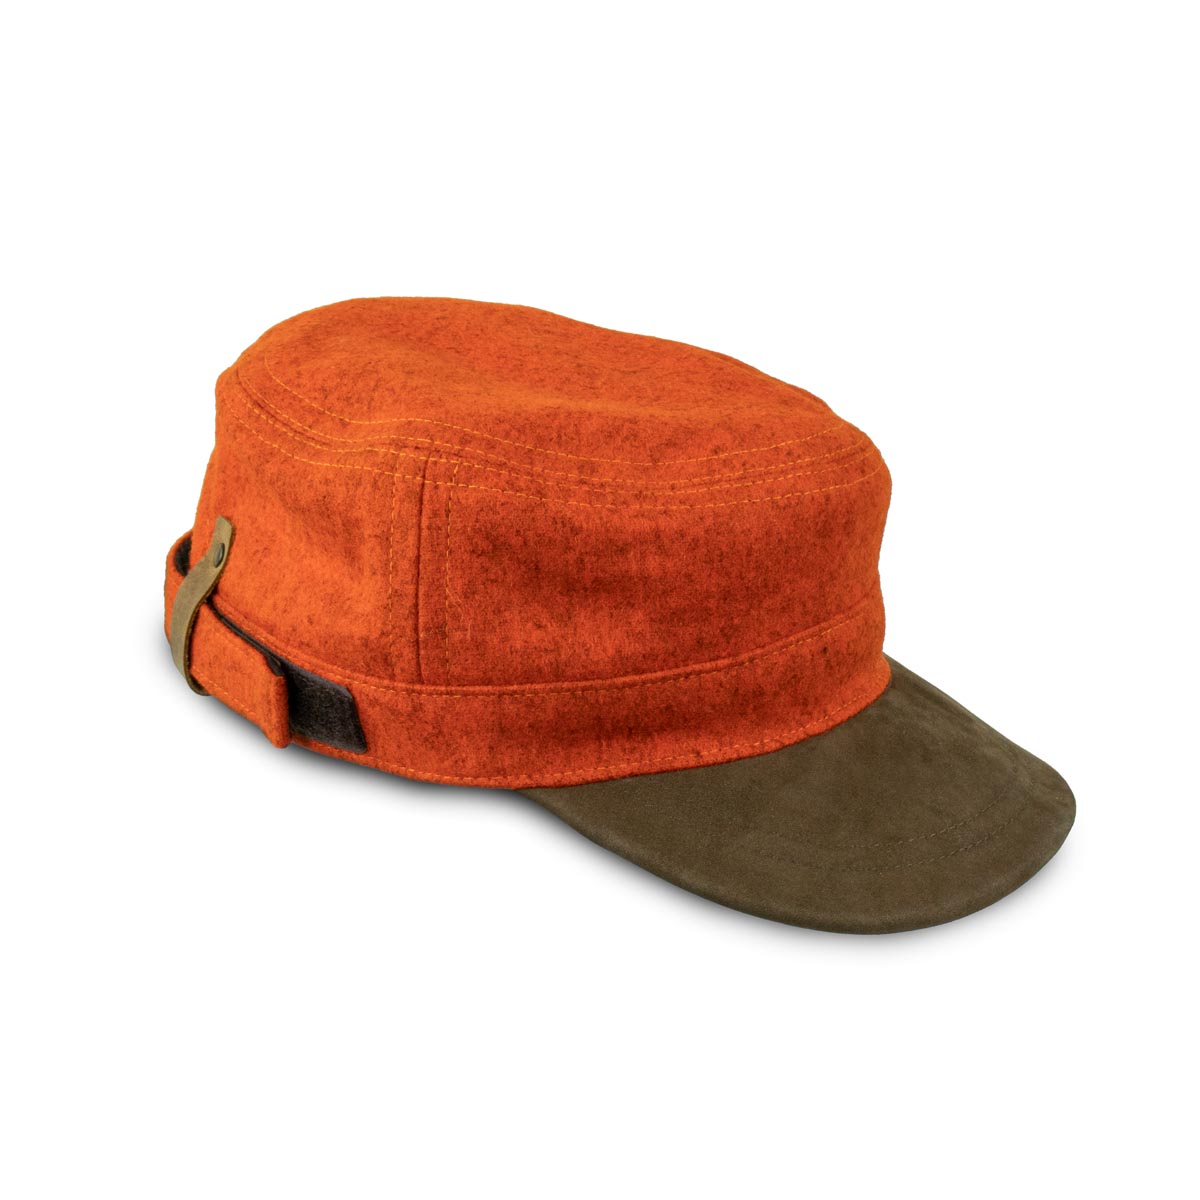 Loden Field Cap "Schirmling", Orange